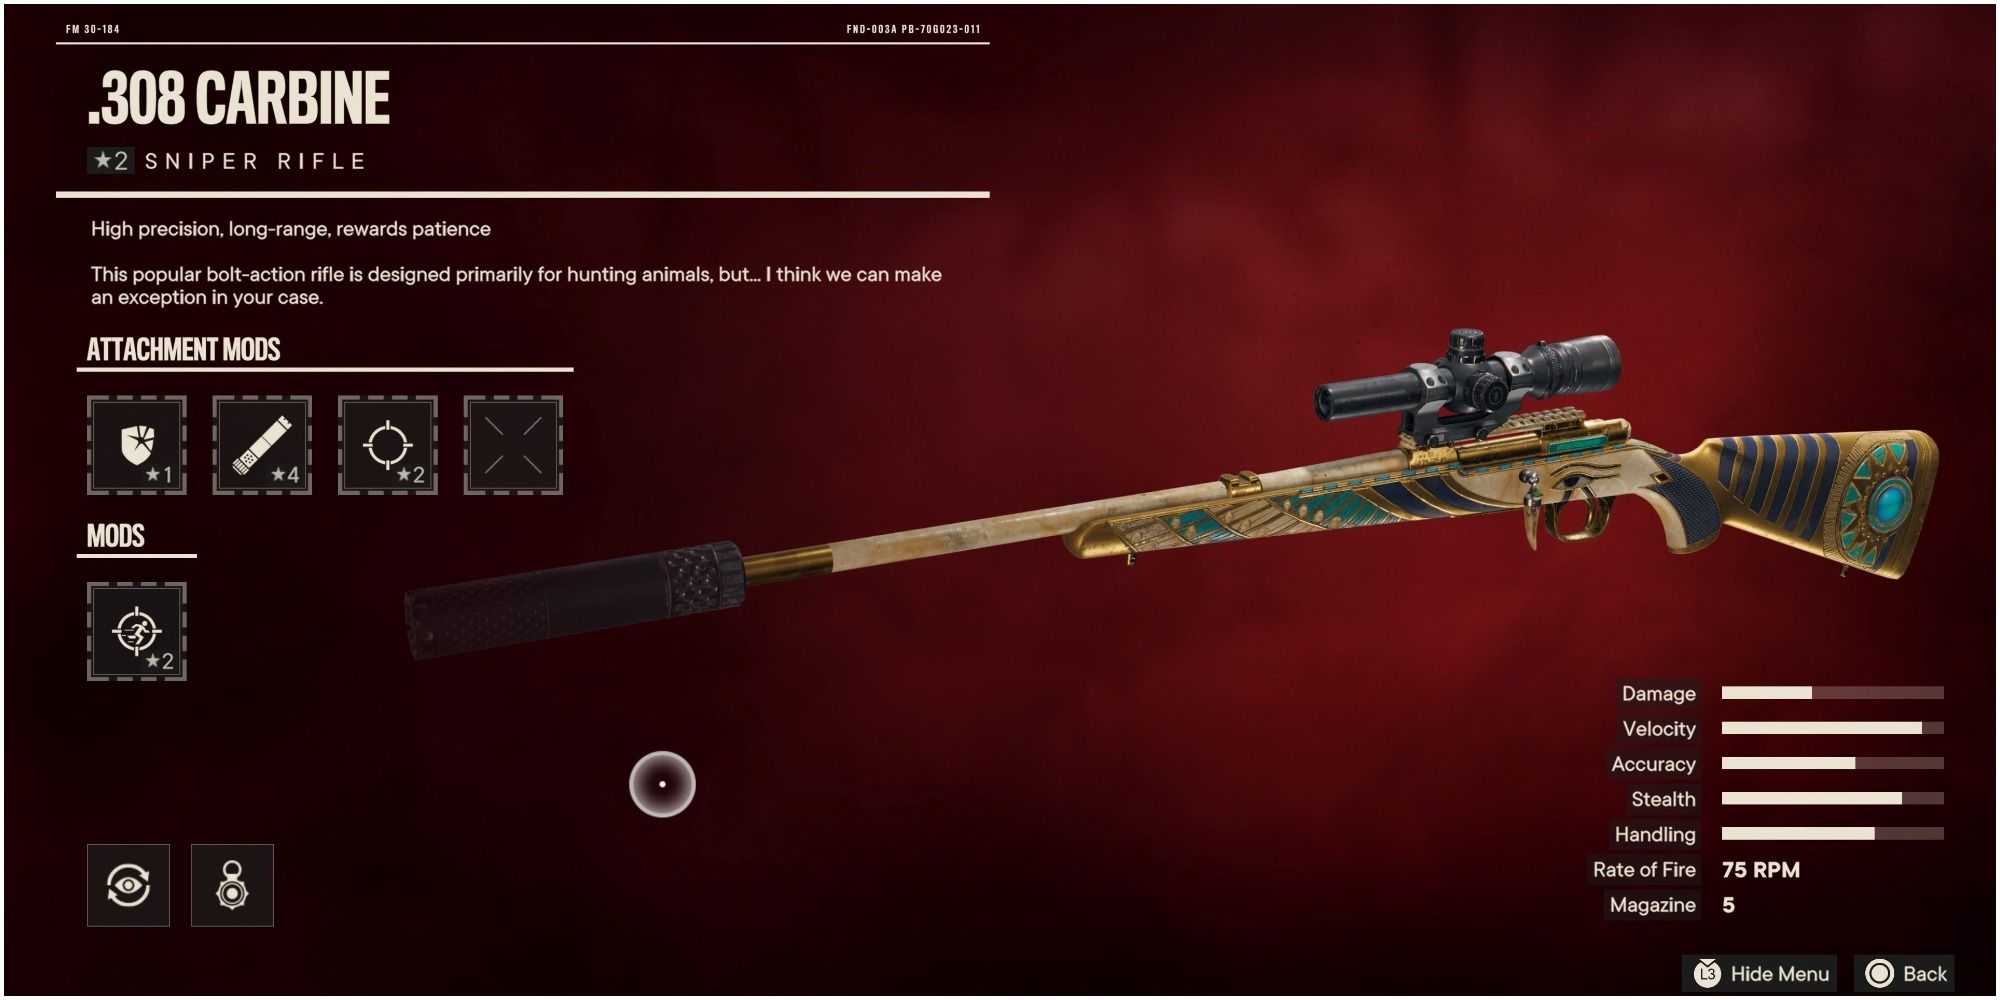 The upgraded .308 Carbine sniper